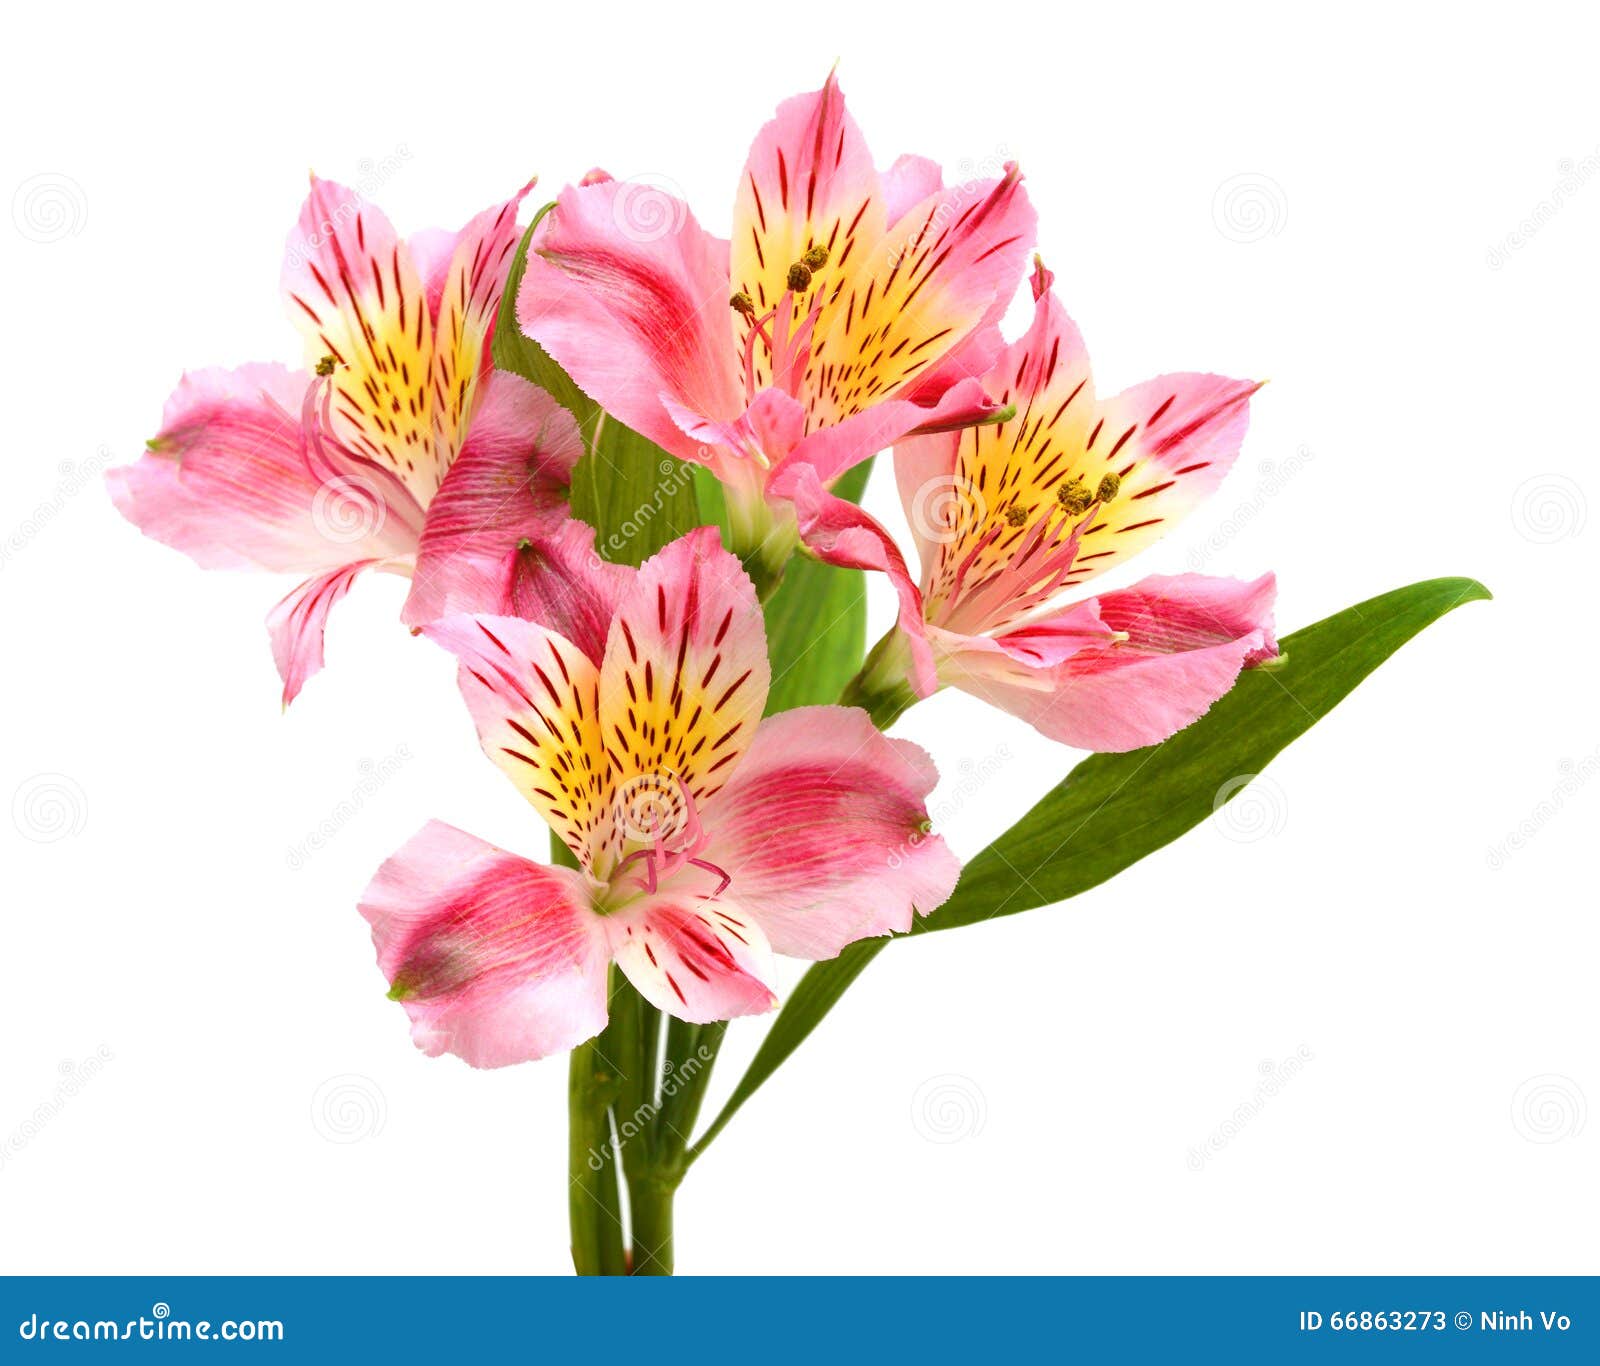 alstroemeria flowers